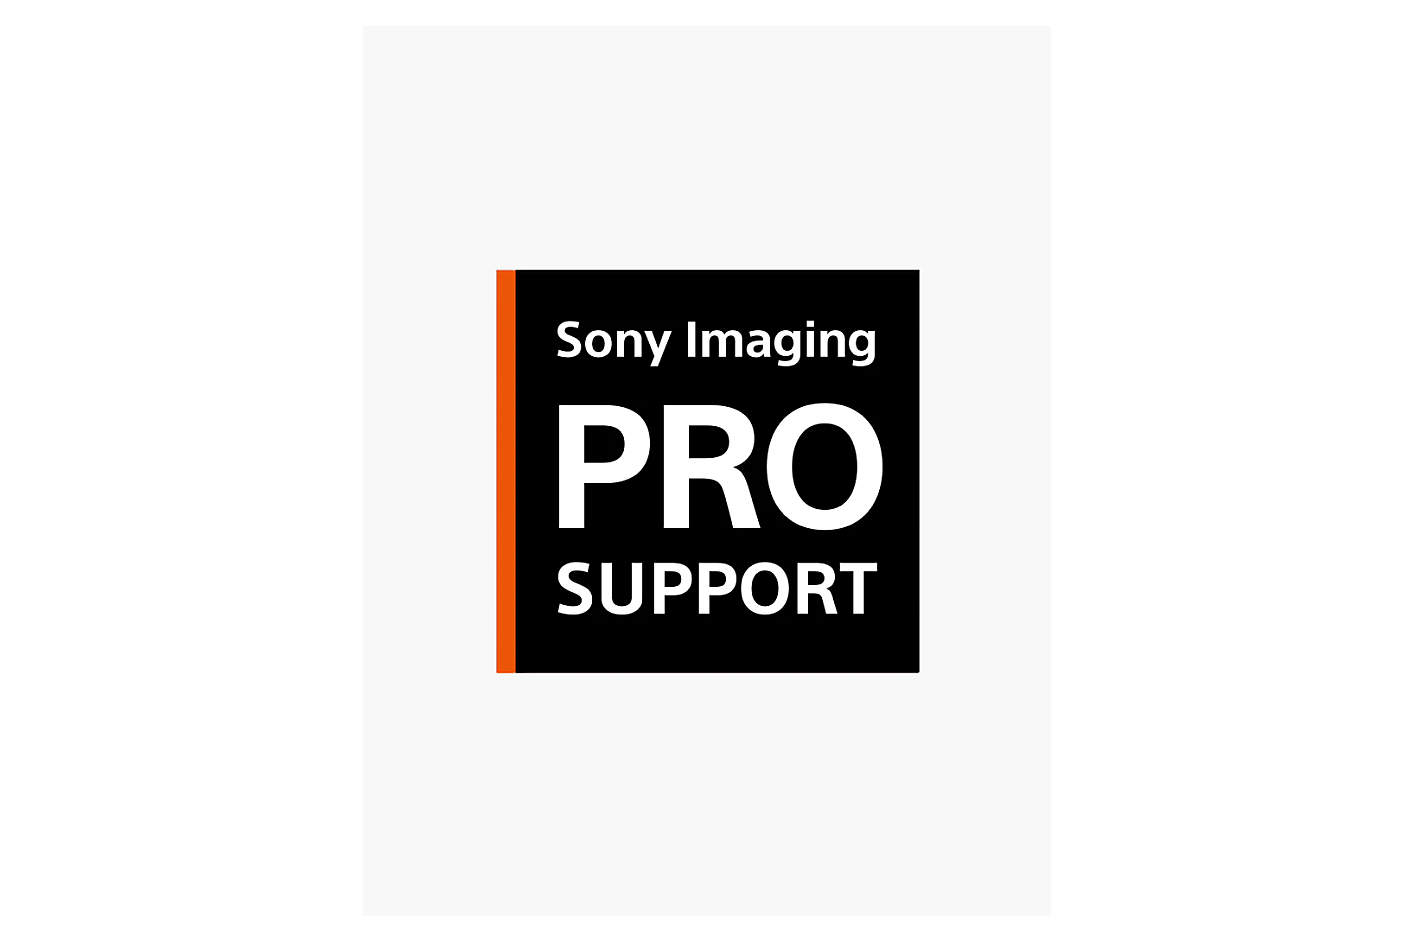 Sigla Sony Imaging Pro Support